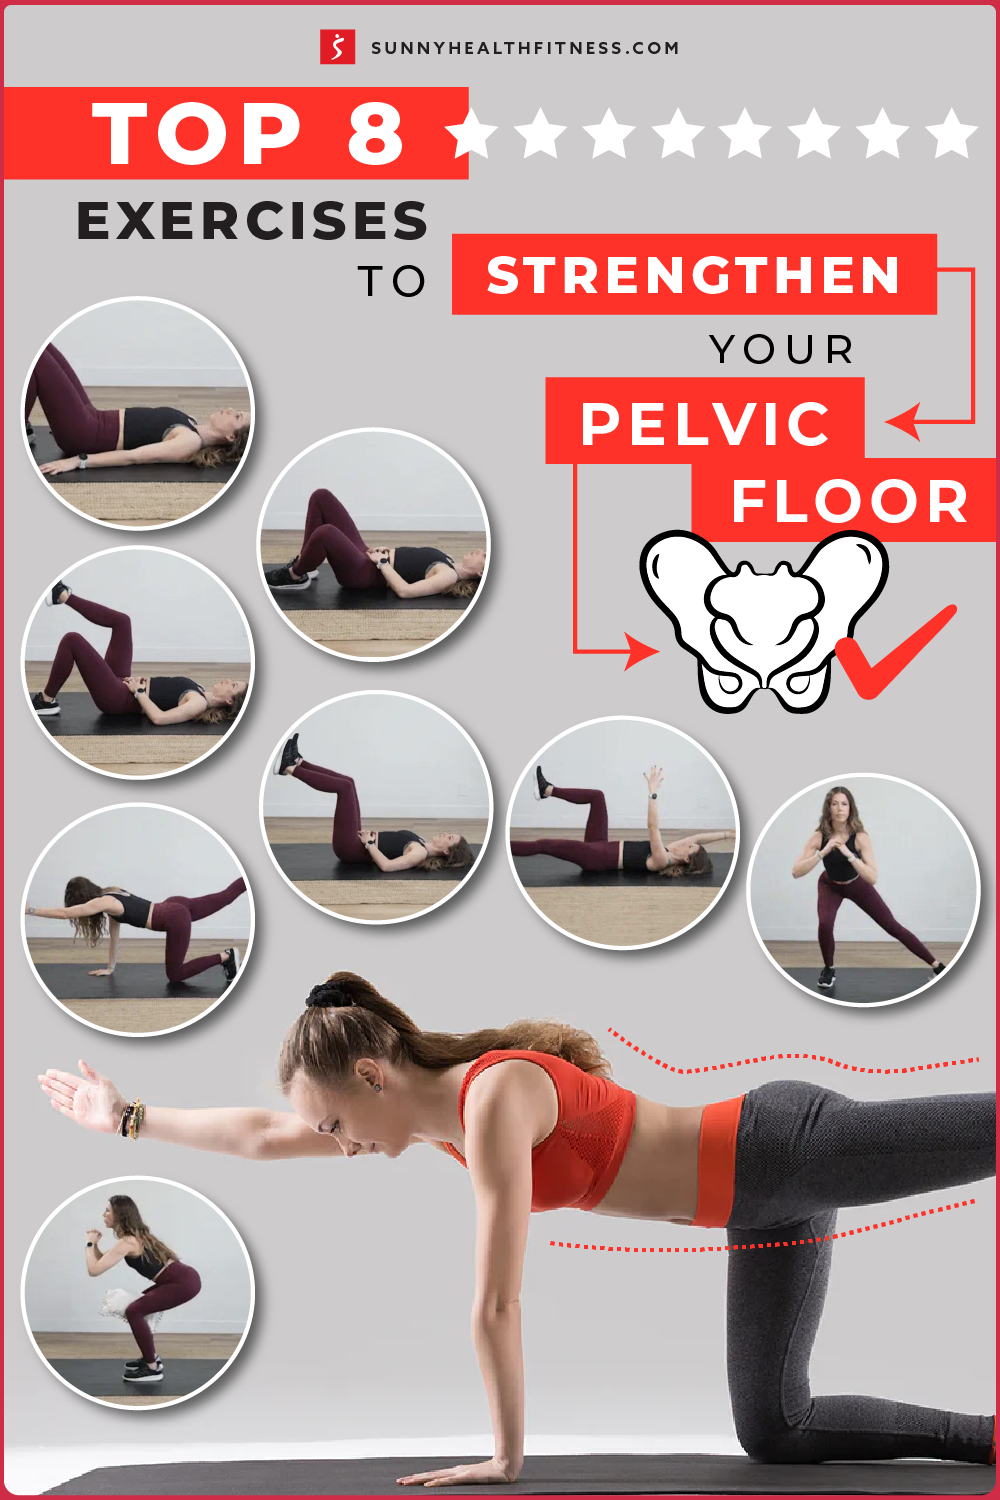 Your Pelvic Floor Muscles